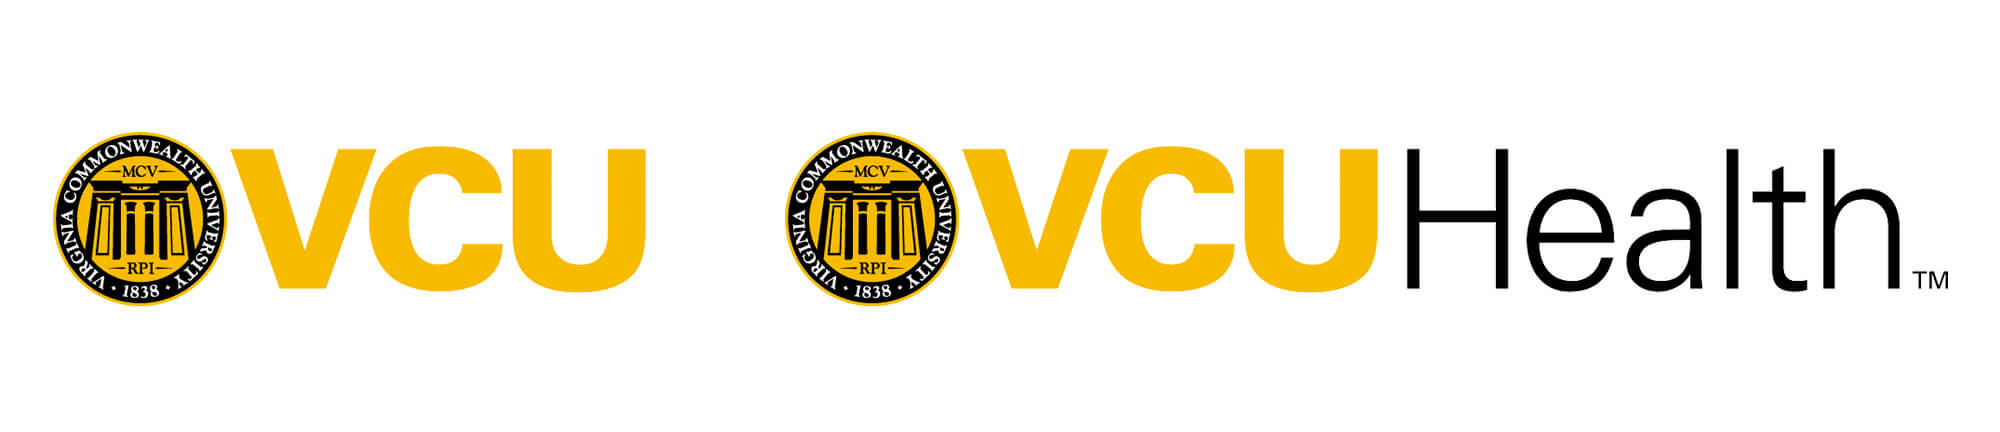 VCU and VCU Health logos